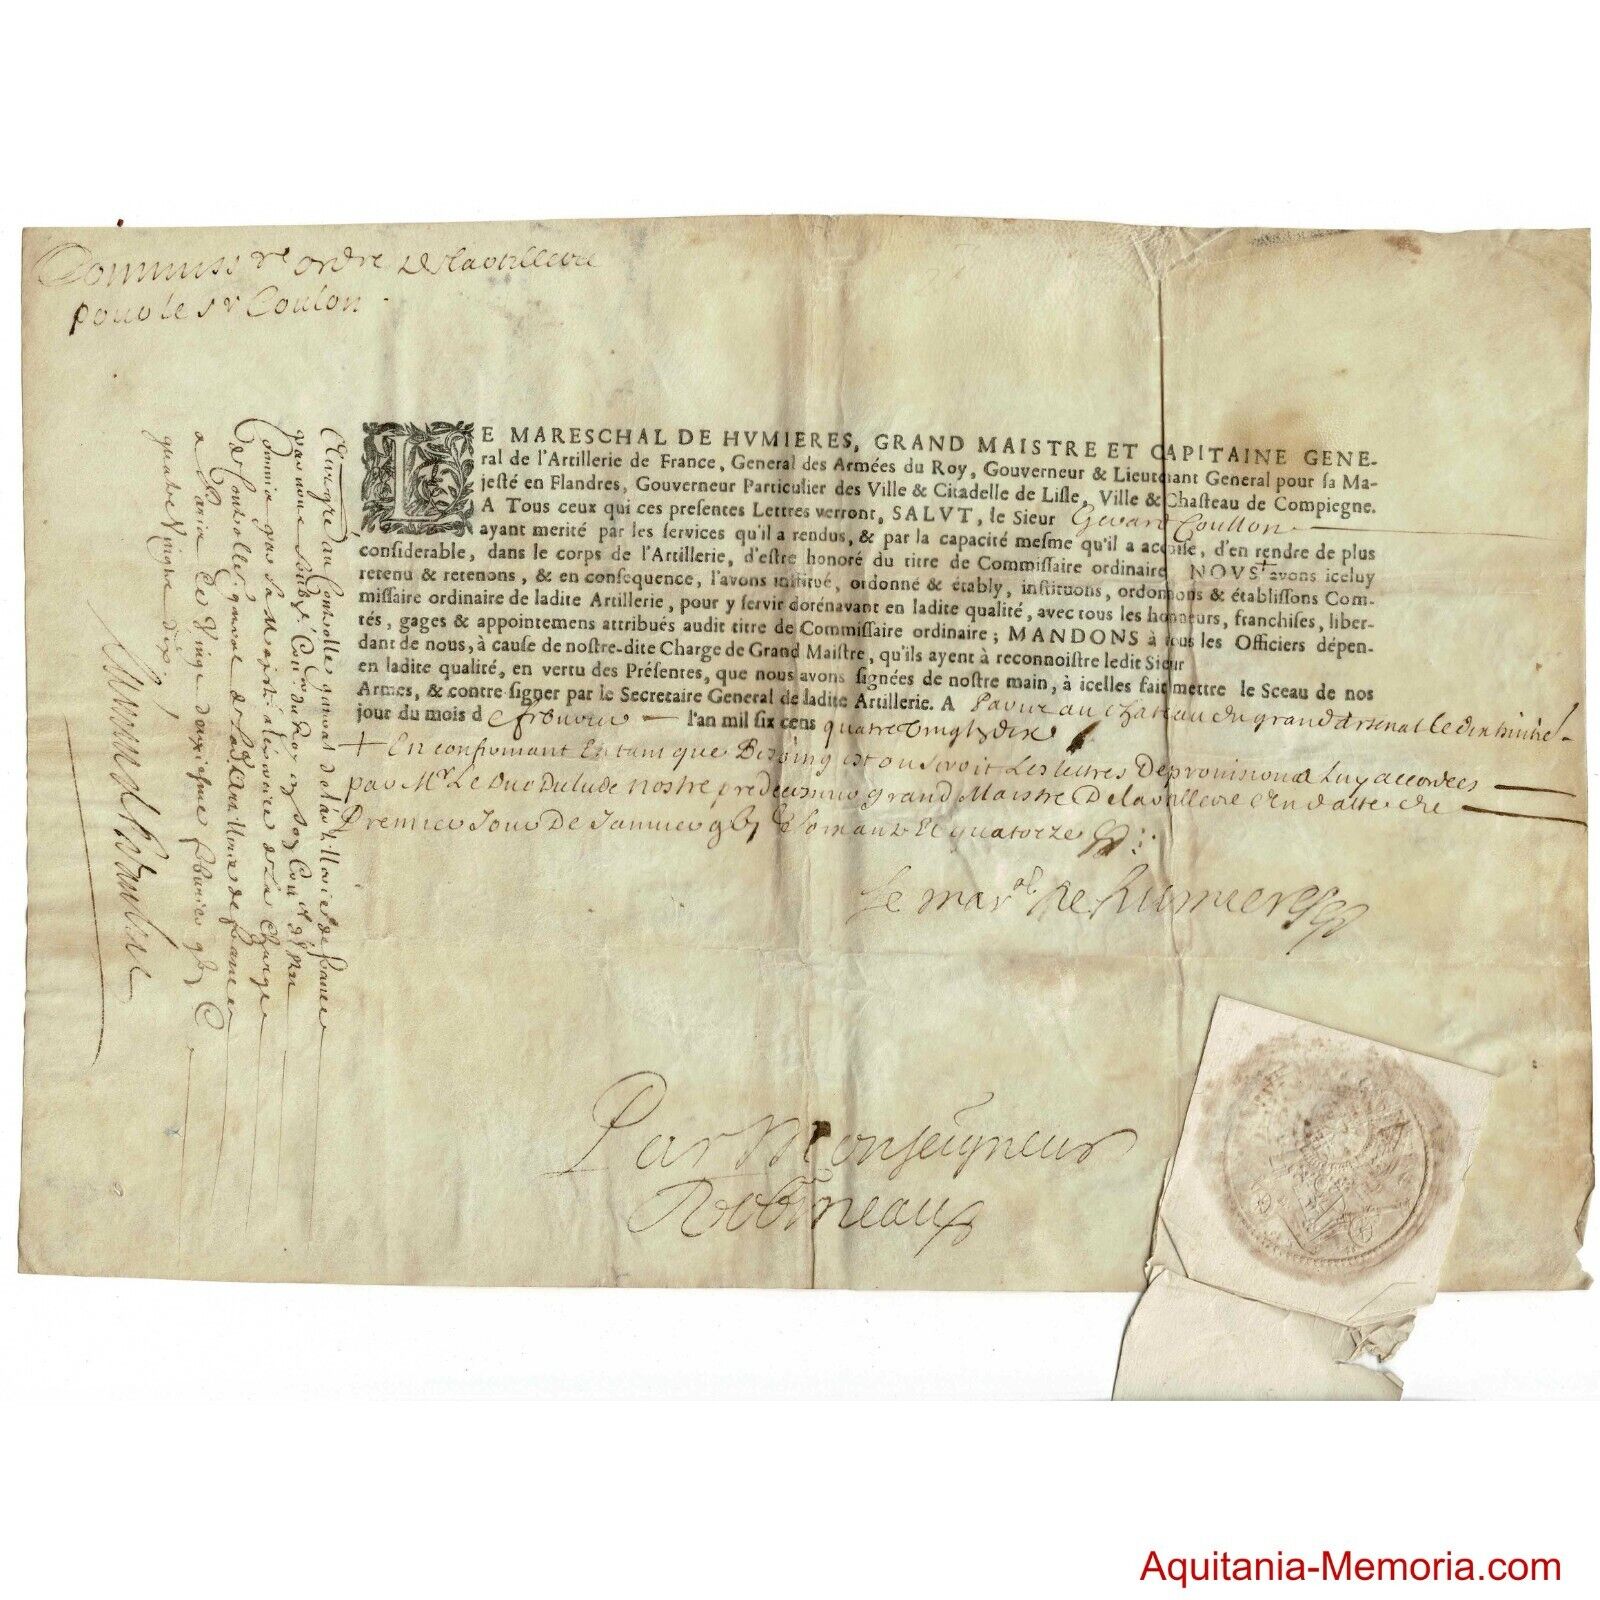 Louis de Crevant, Grand Master of Artillery of France Commission Letter